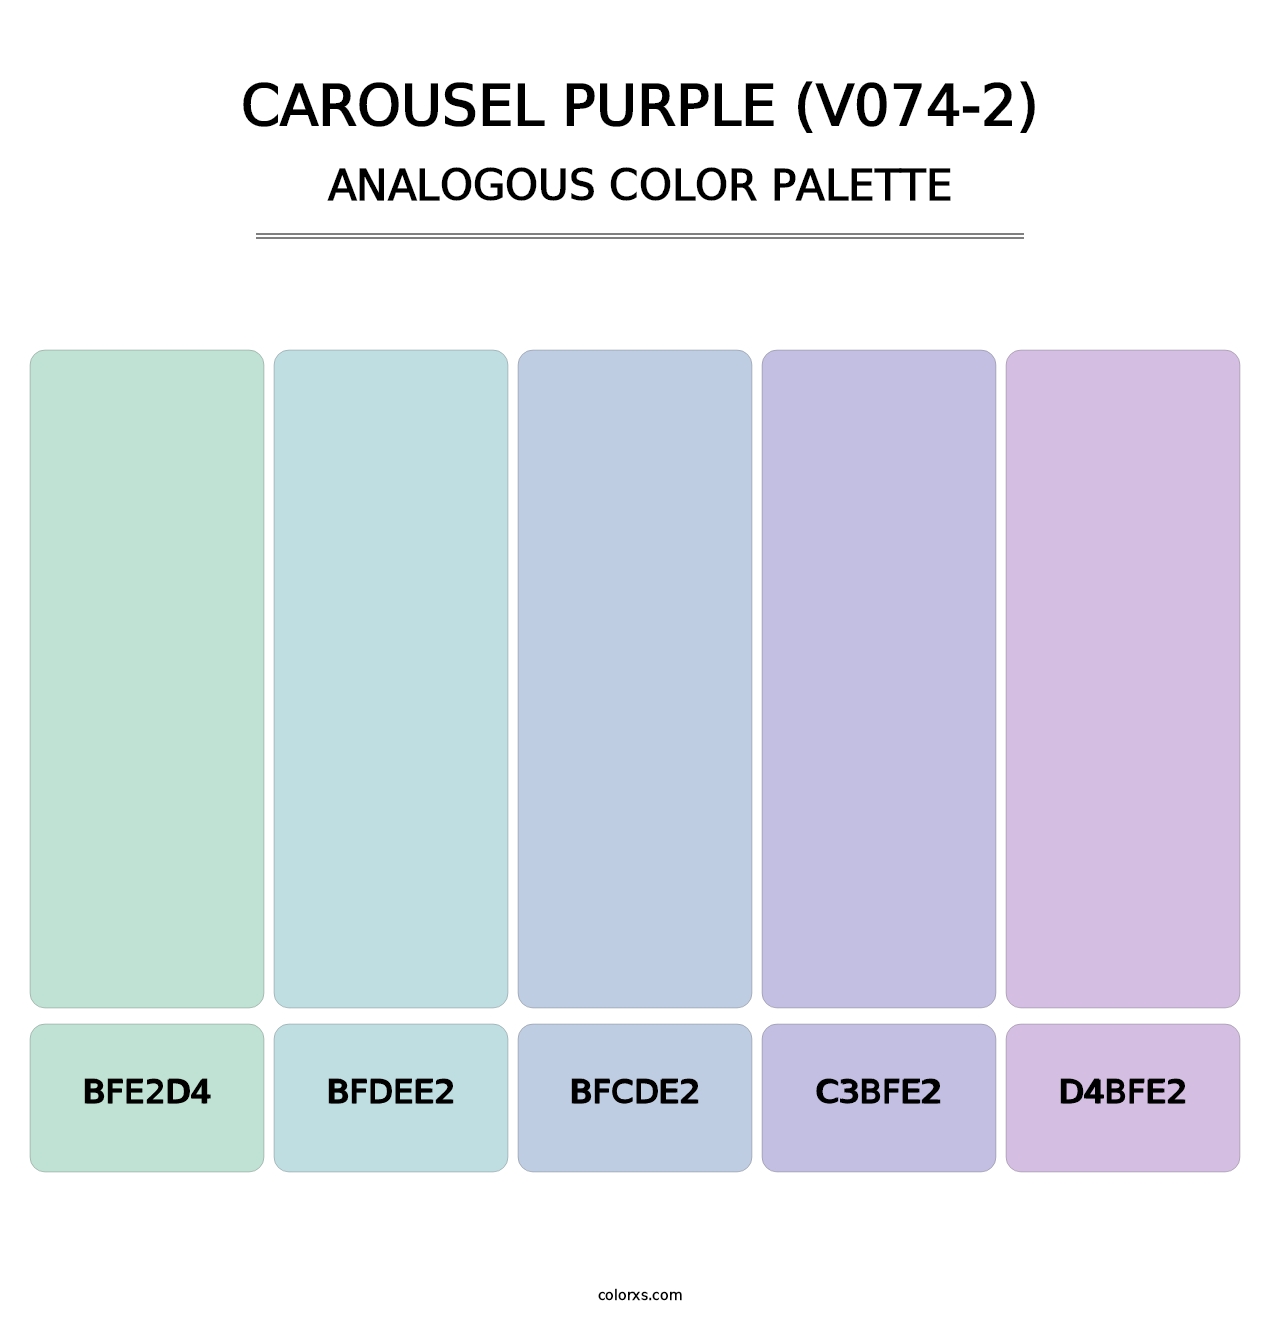 Carousel Purple (V074-2) - Analogous Color Palette